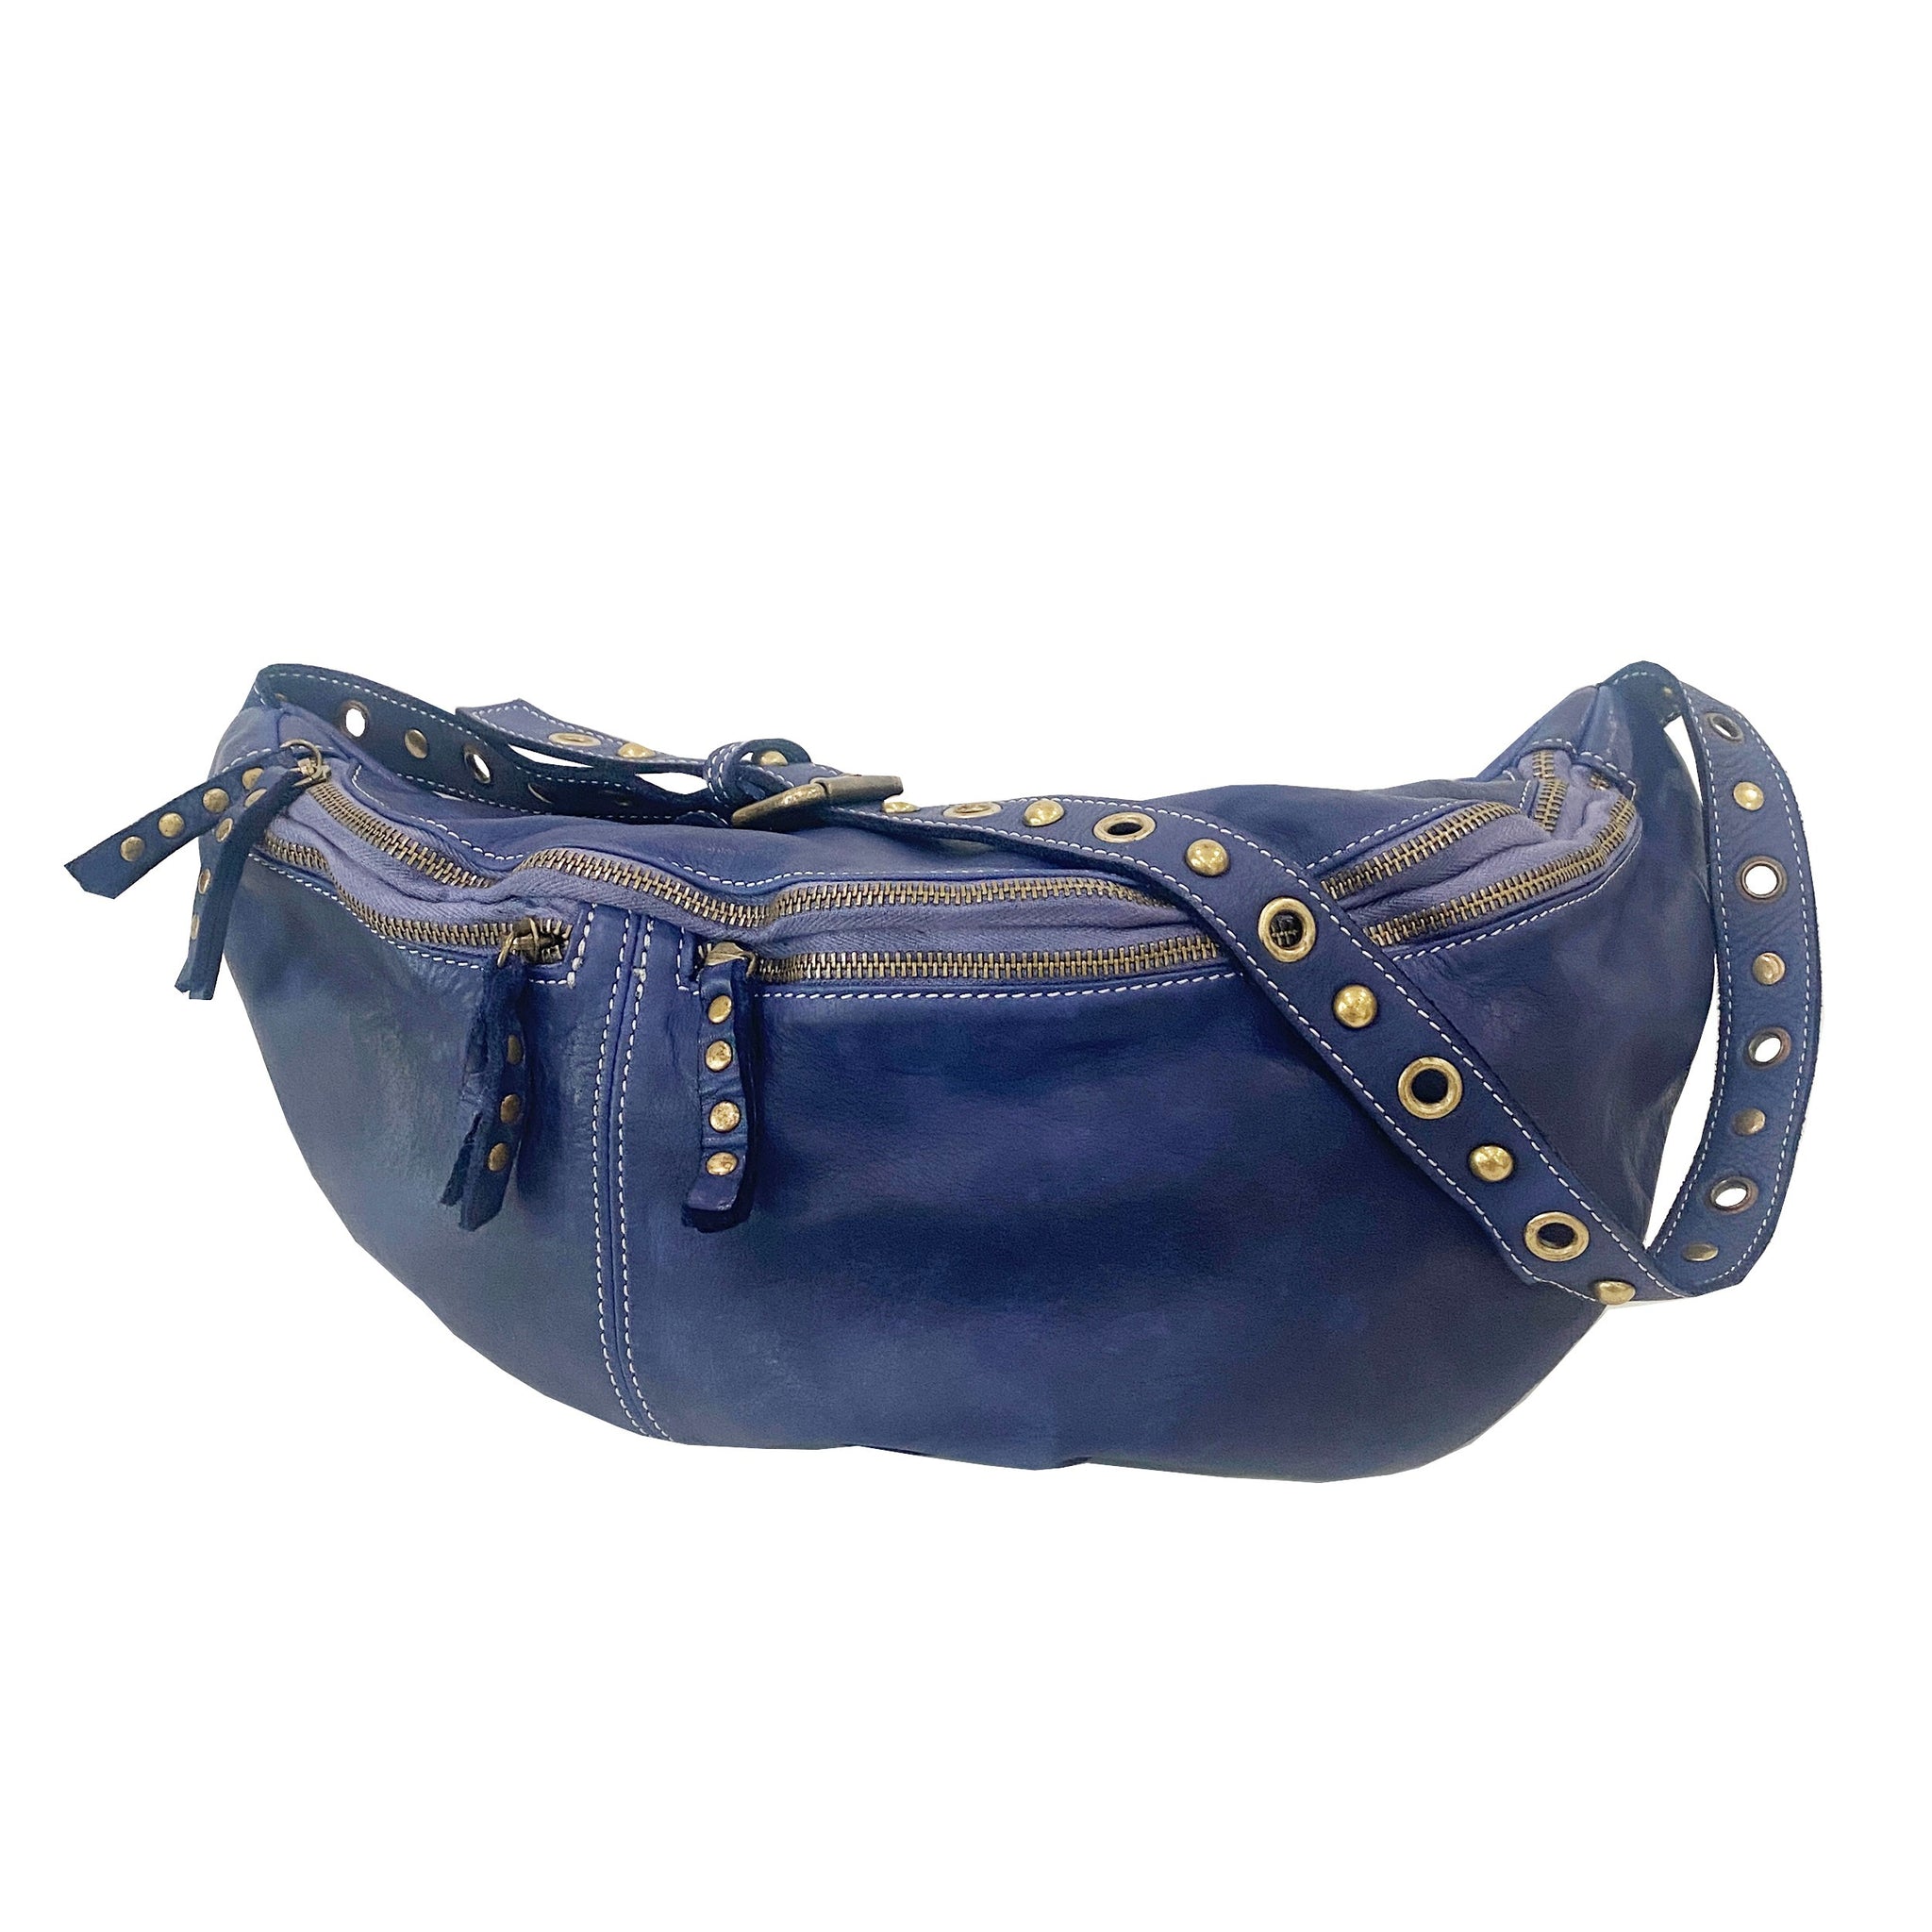 Large Leather Bella Sling Bag in Navy